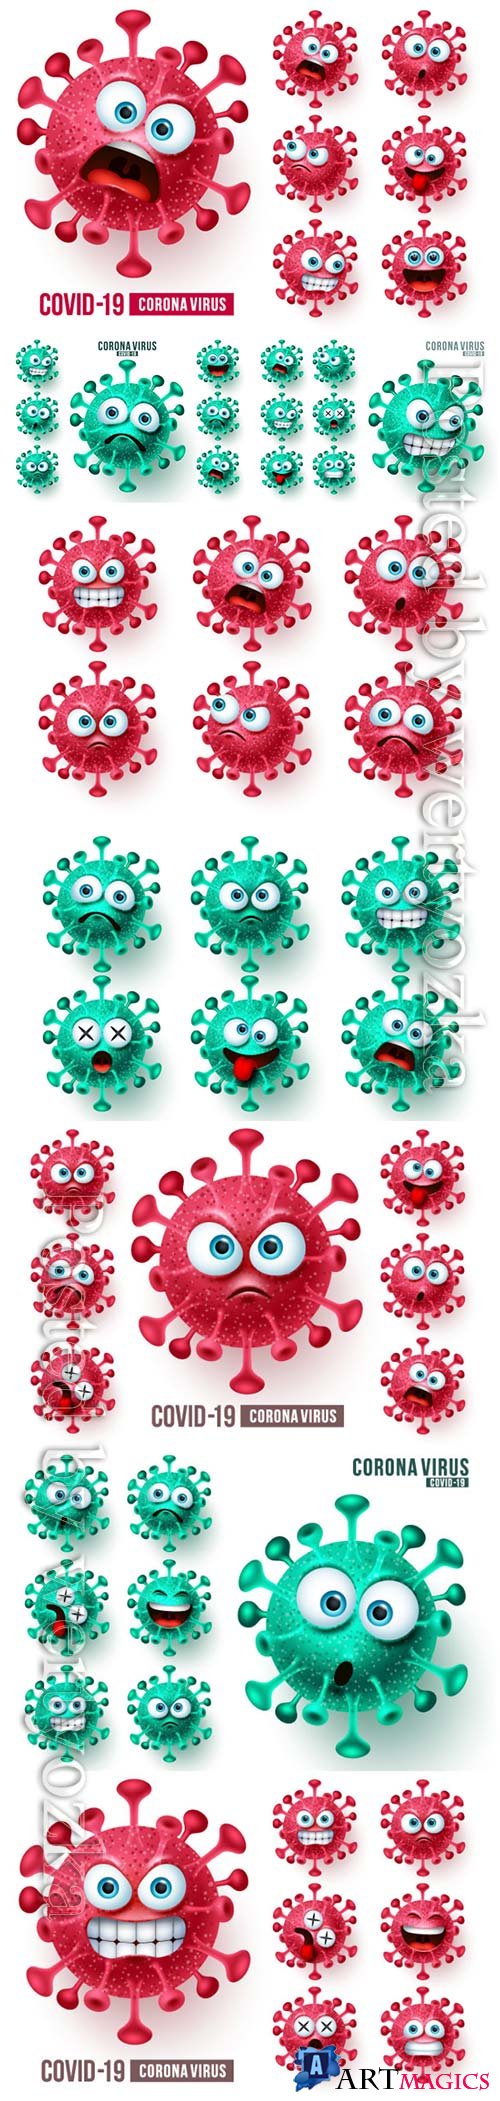 Corona virus emoticons vector set